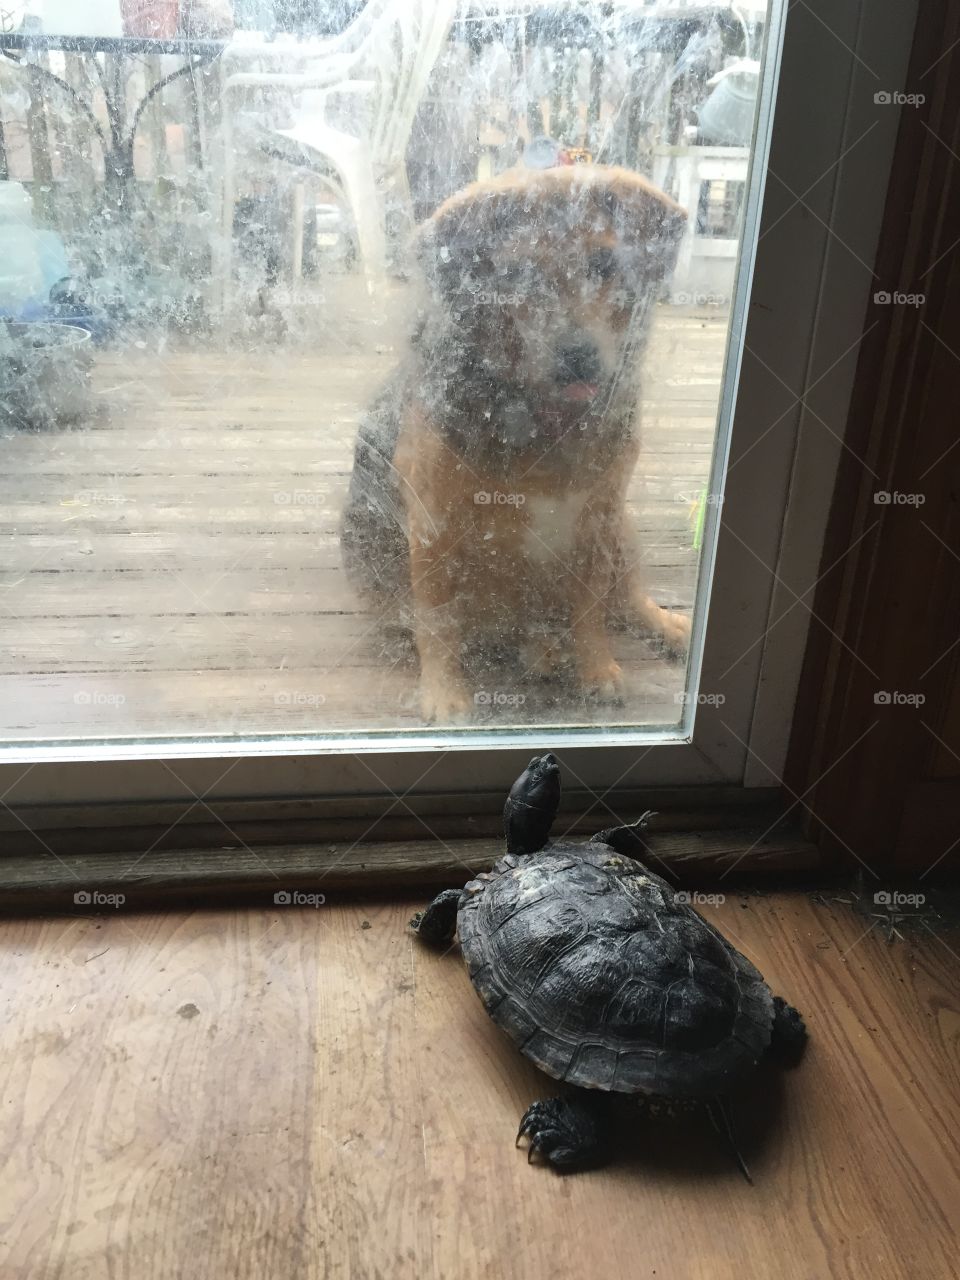 watching turtle